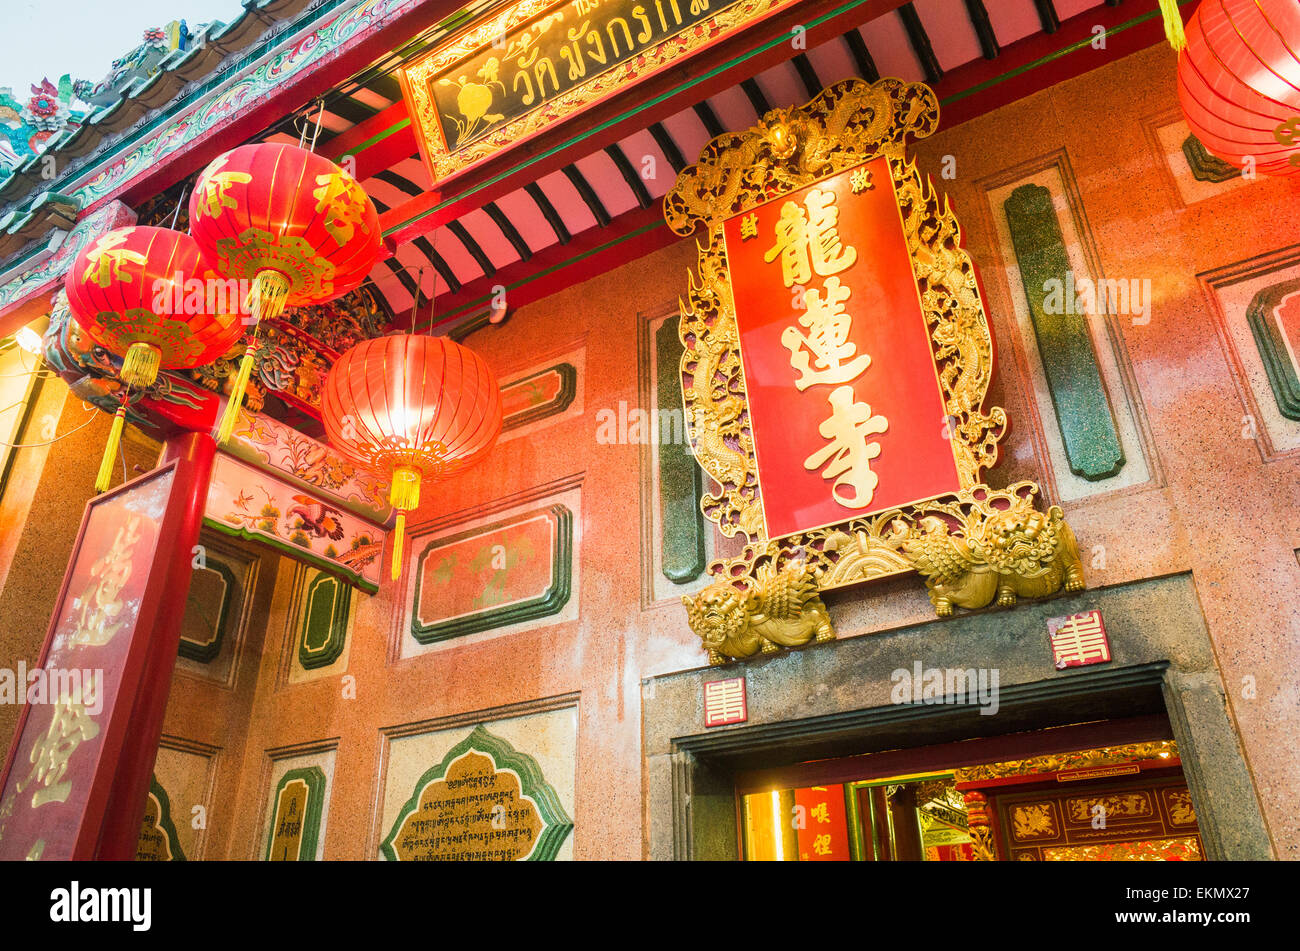 31, Jan 2014 - Bangkok, Thailand: Chinese new year celebrations in Bangkok Chinatown, Yaowarat. Stock Photo